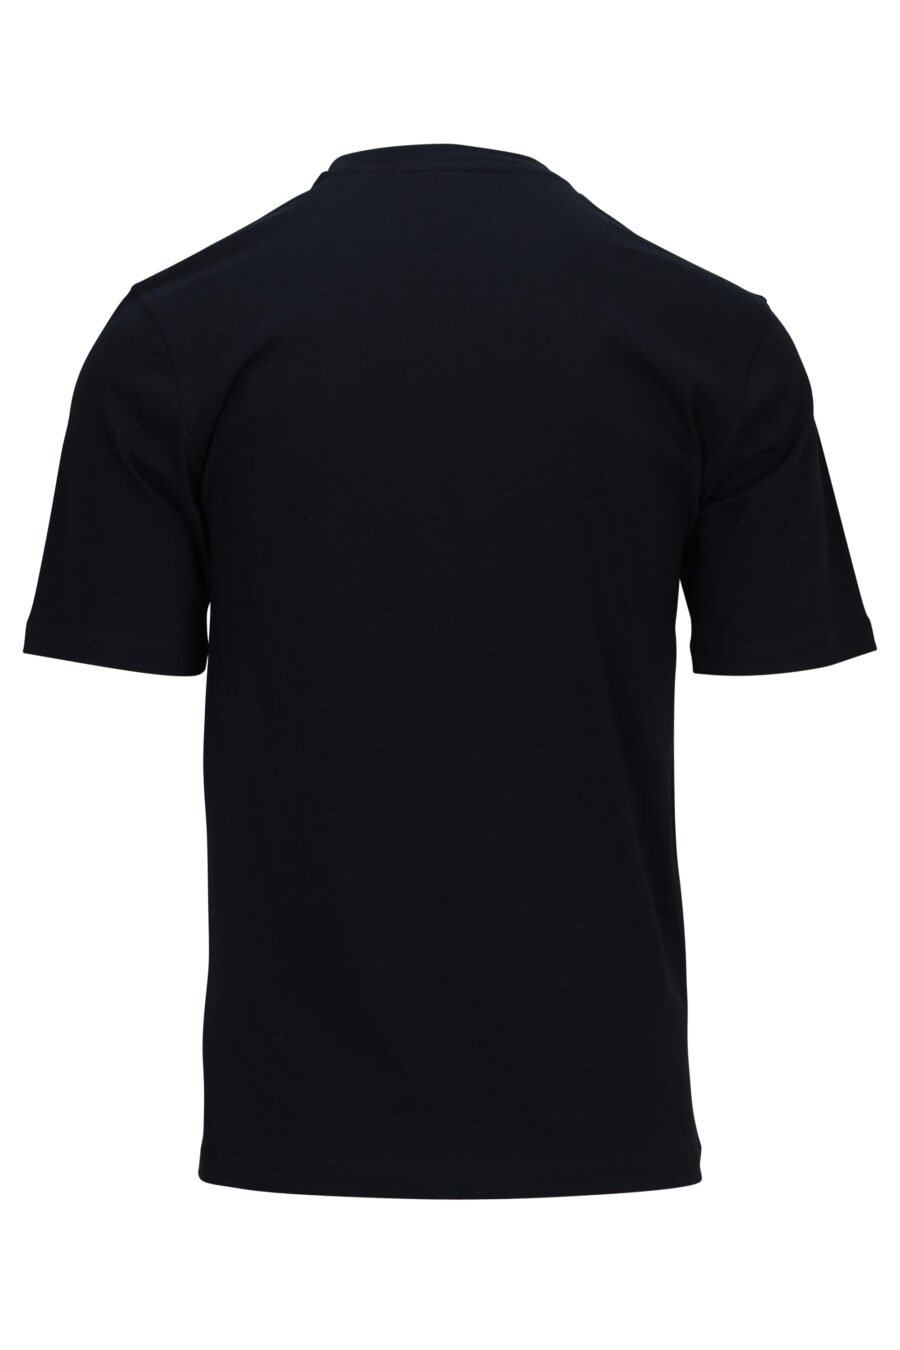 T-shirt noir avec mini logo "teddy tailor" - 667113108179 1